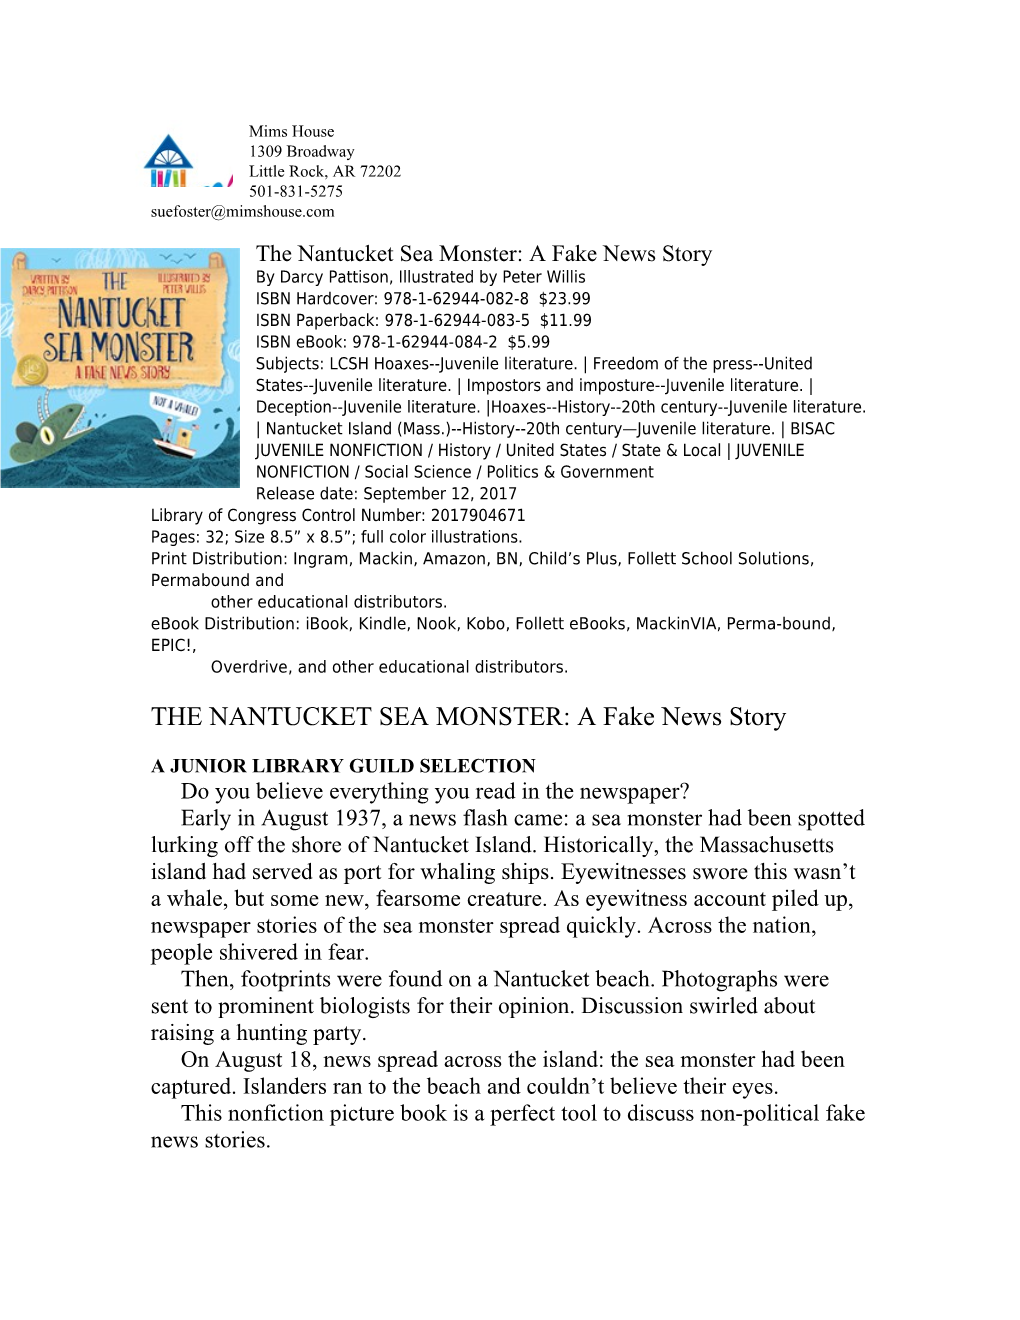 The Nantucket Sea Monster: a Fake News Story